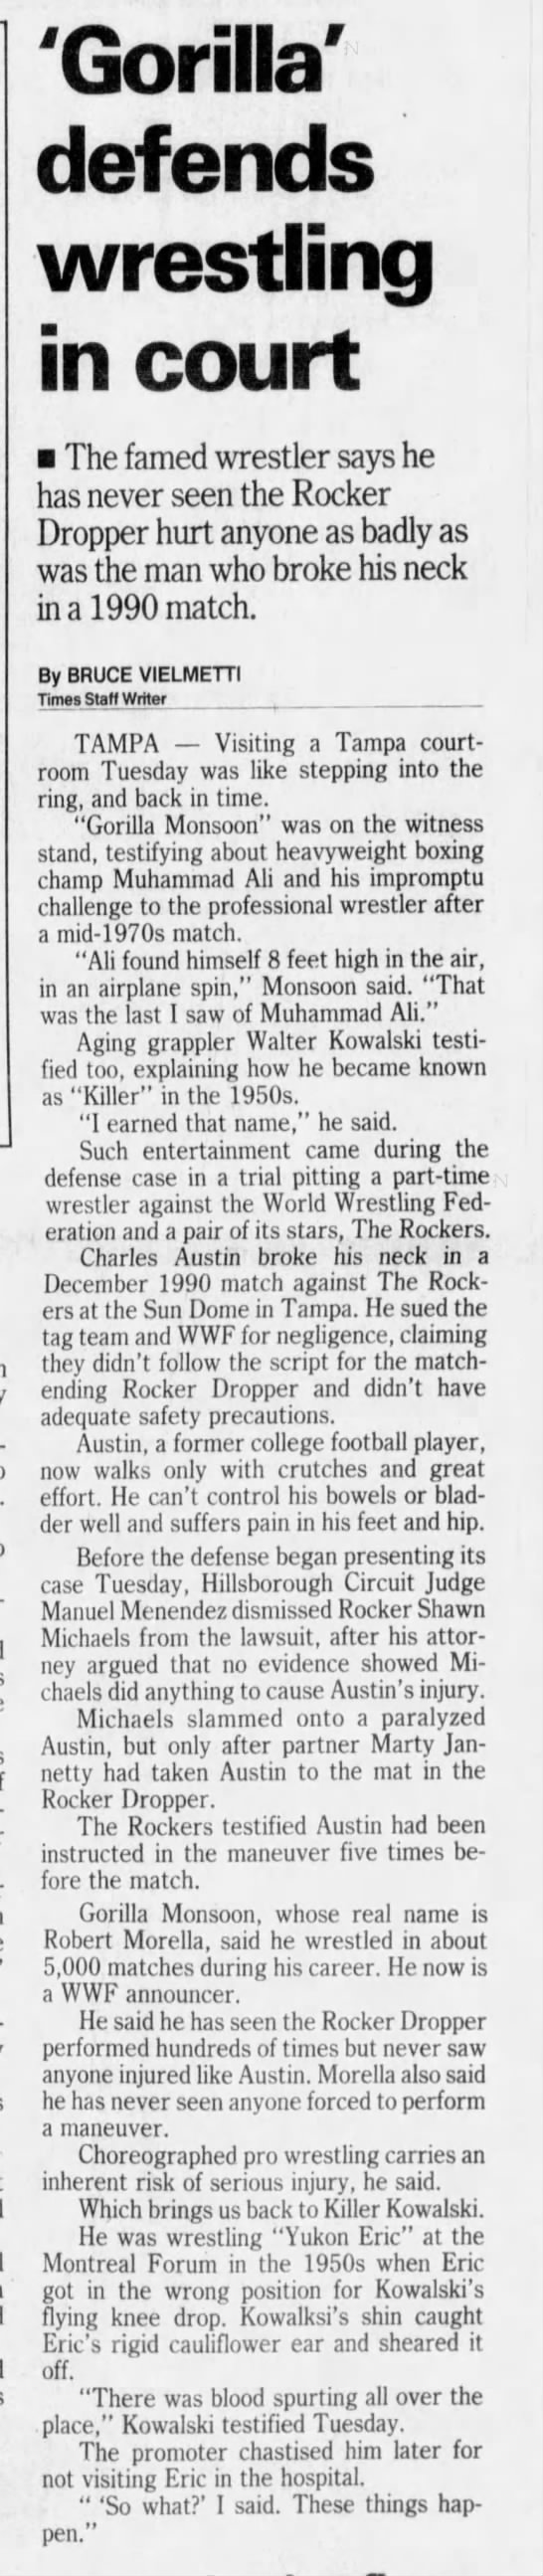 'Gorilla' defends wrestling in court (Tampa Bay Times 4/27/1994) - 